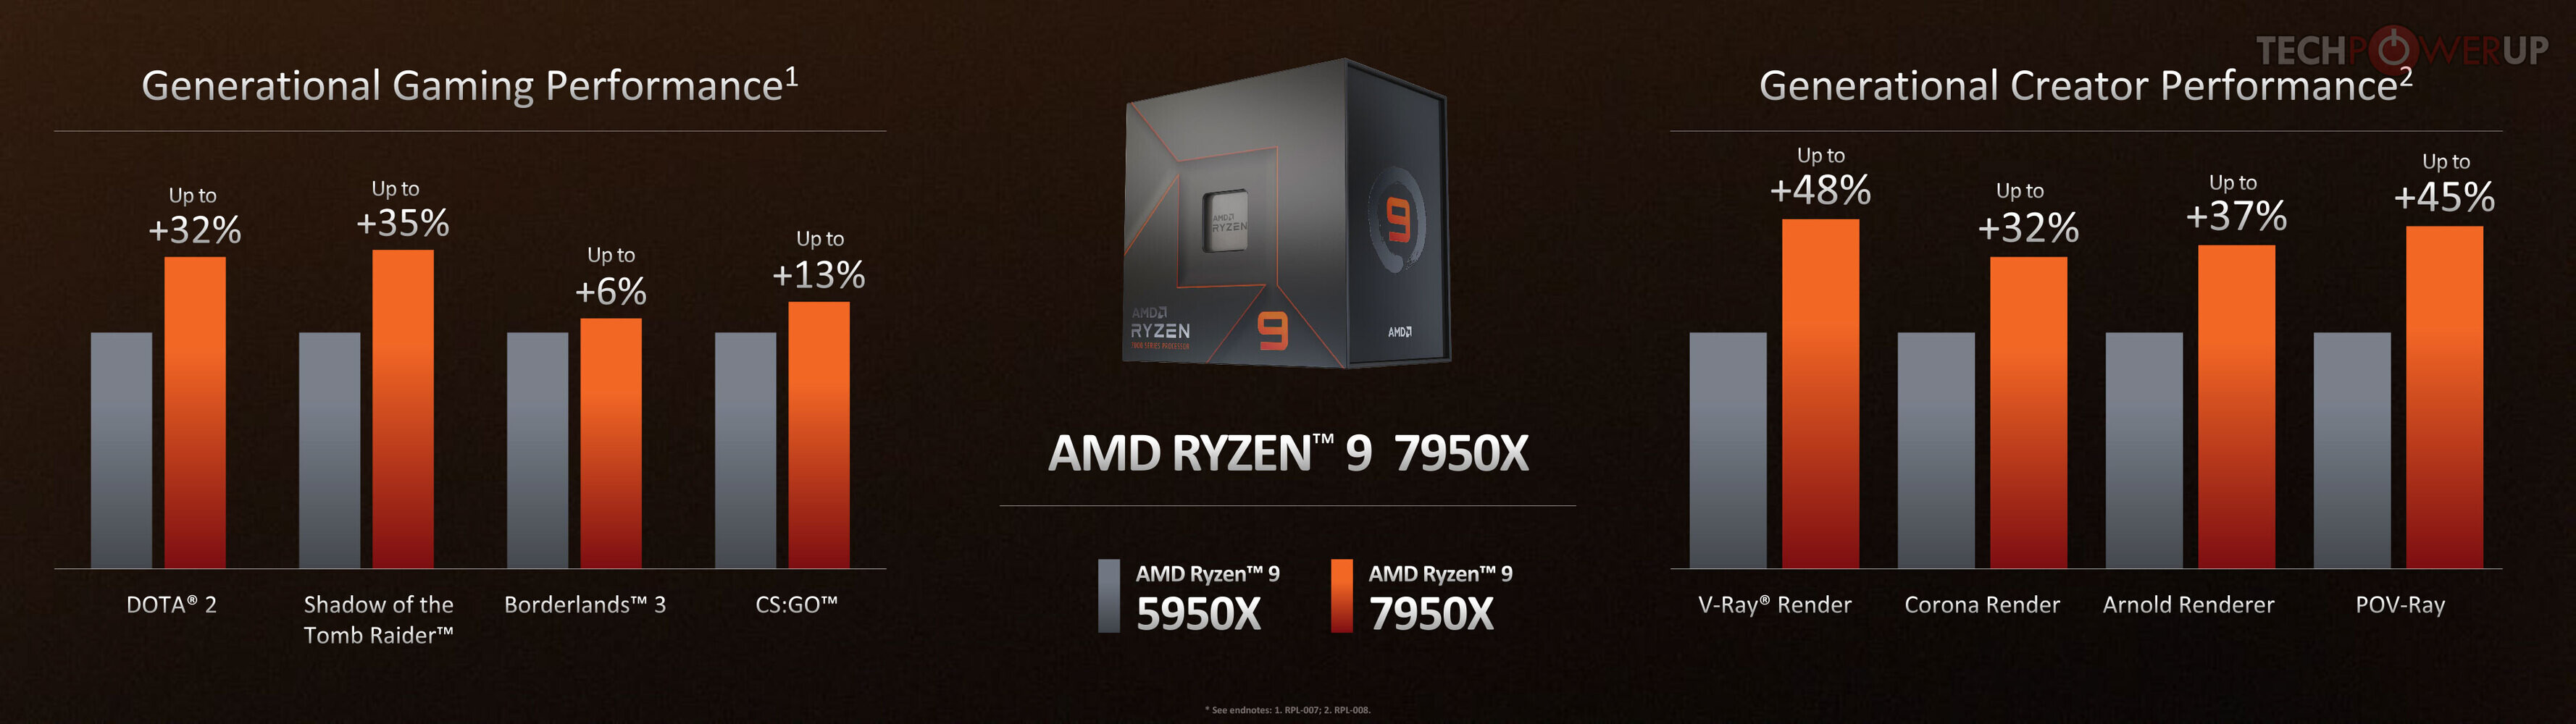 The super-efficient Ryzen 5 5600X is down to £170